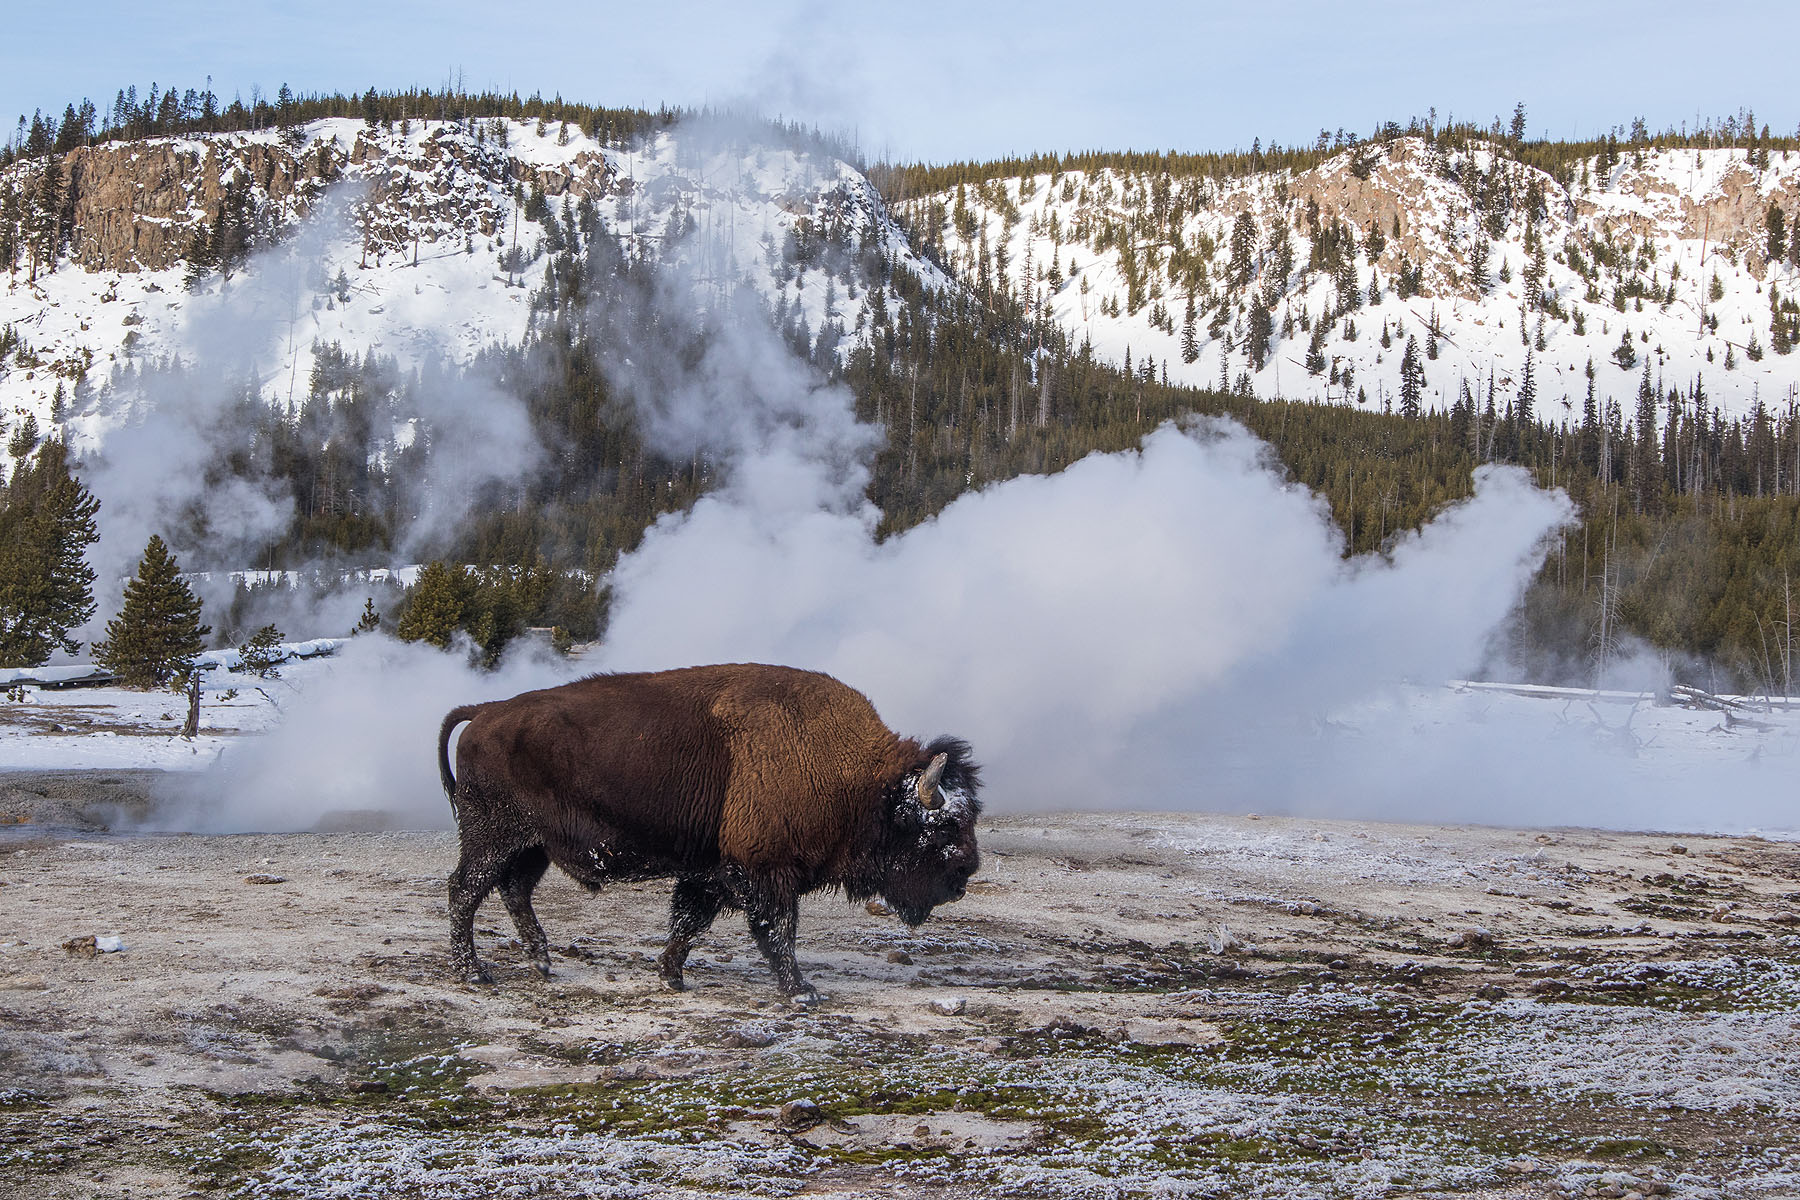 Bison in geyser field.  Click for next photo.